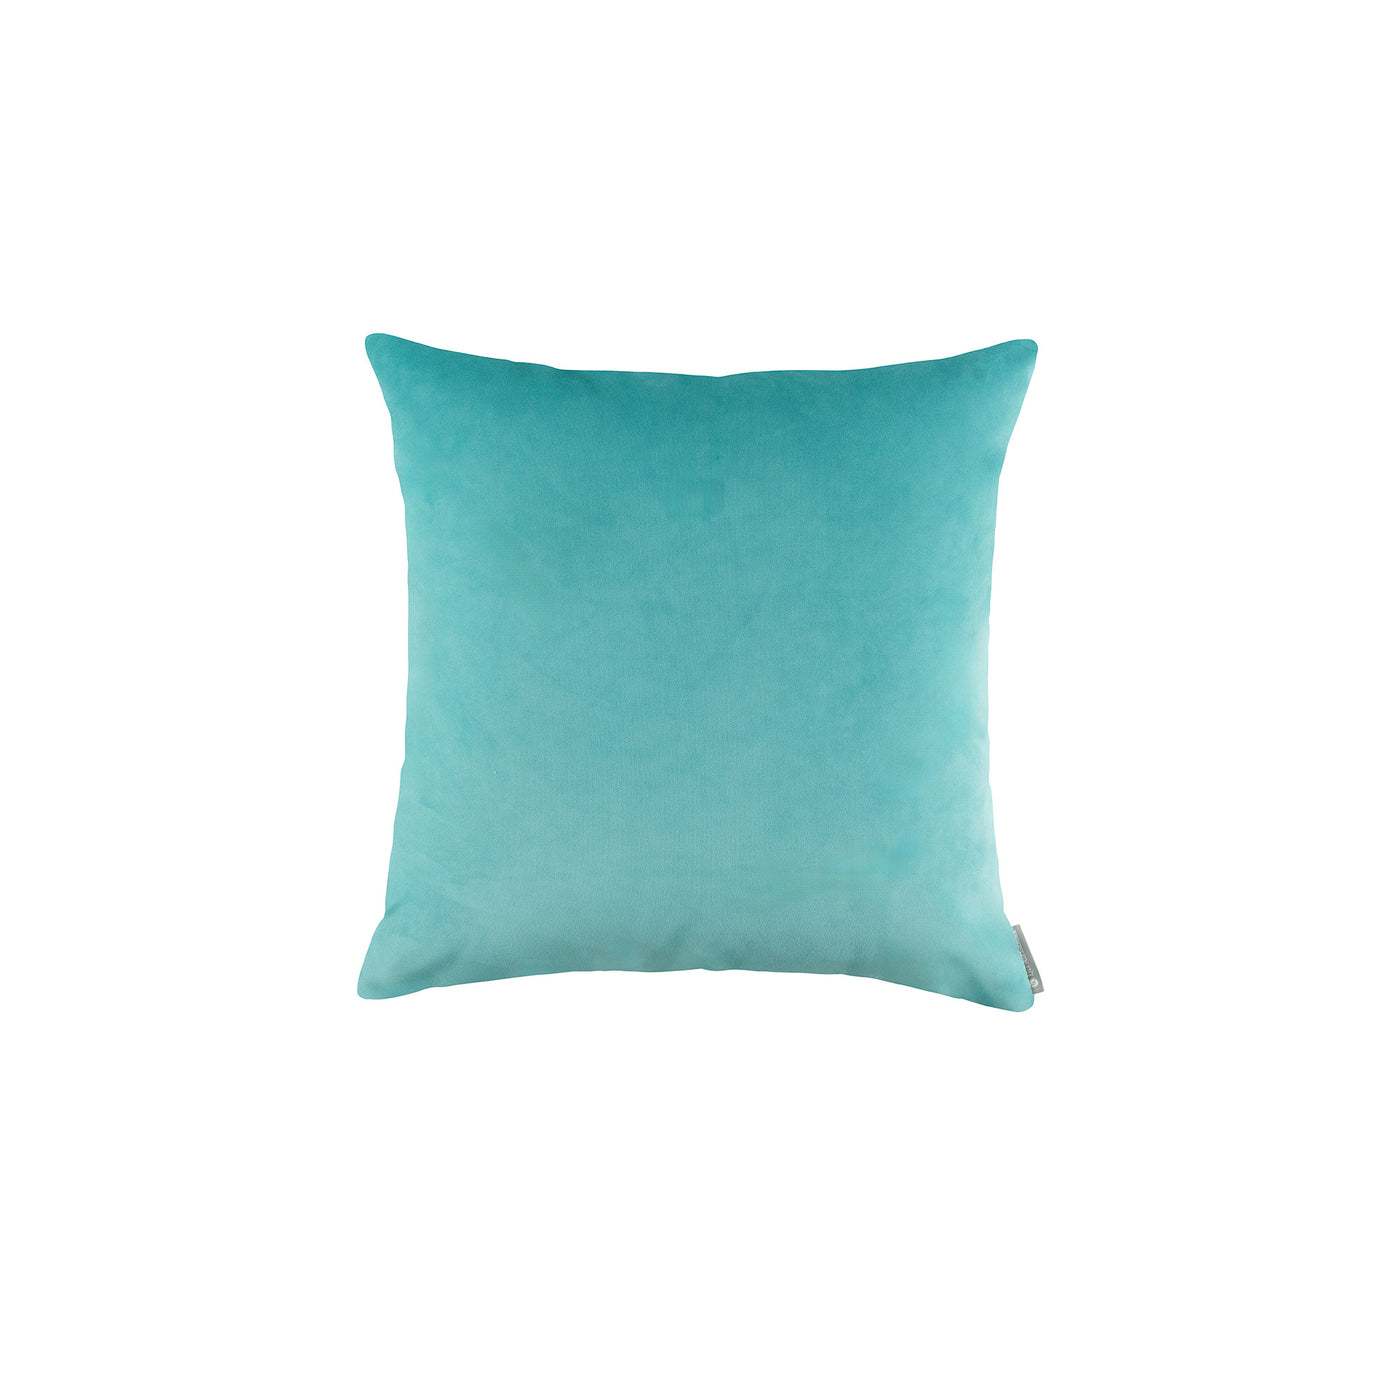 Vivid Bluebox Small Square Pillow (22x22)